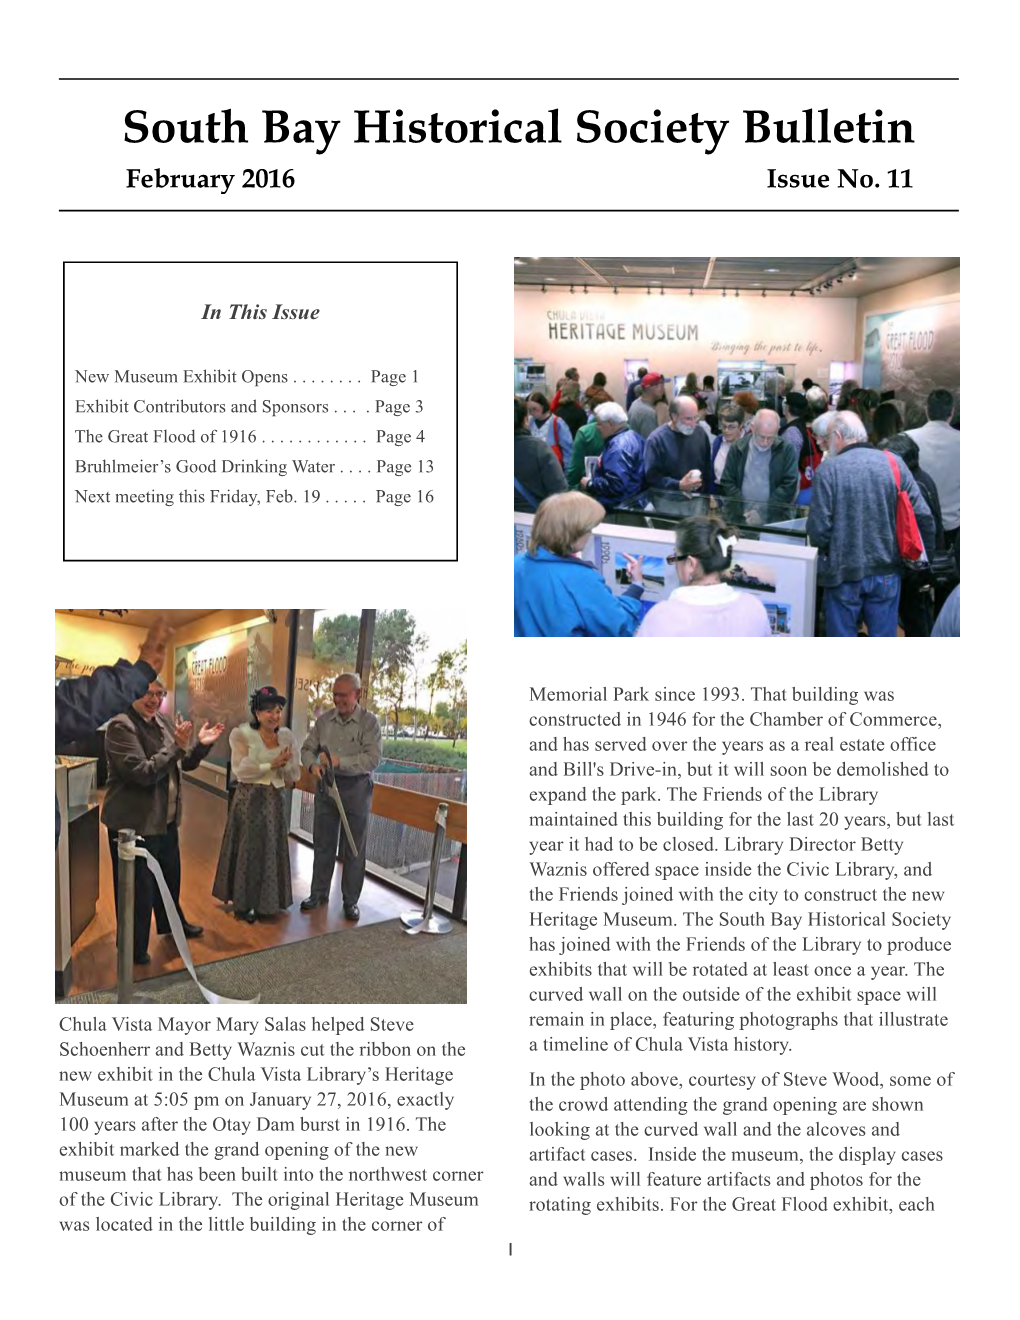 South Bay Historical Society Bulletin February 2016 Issue No